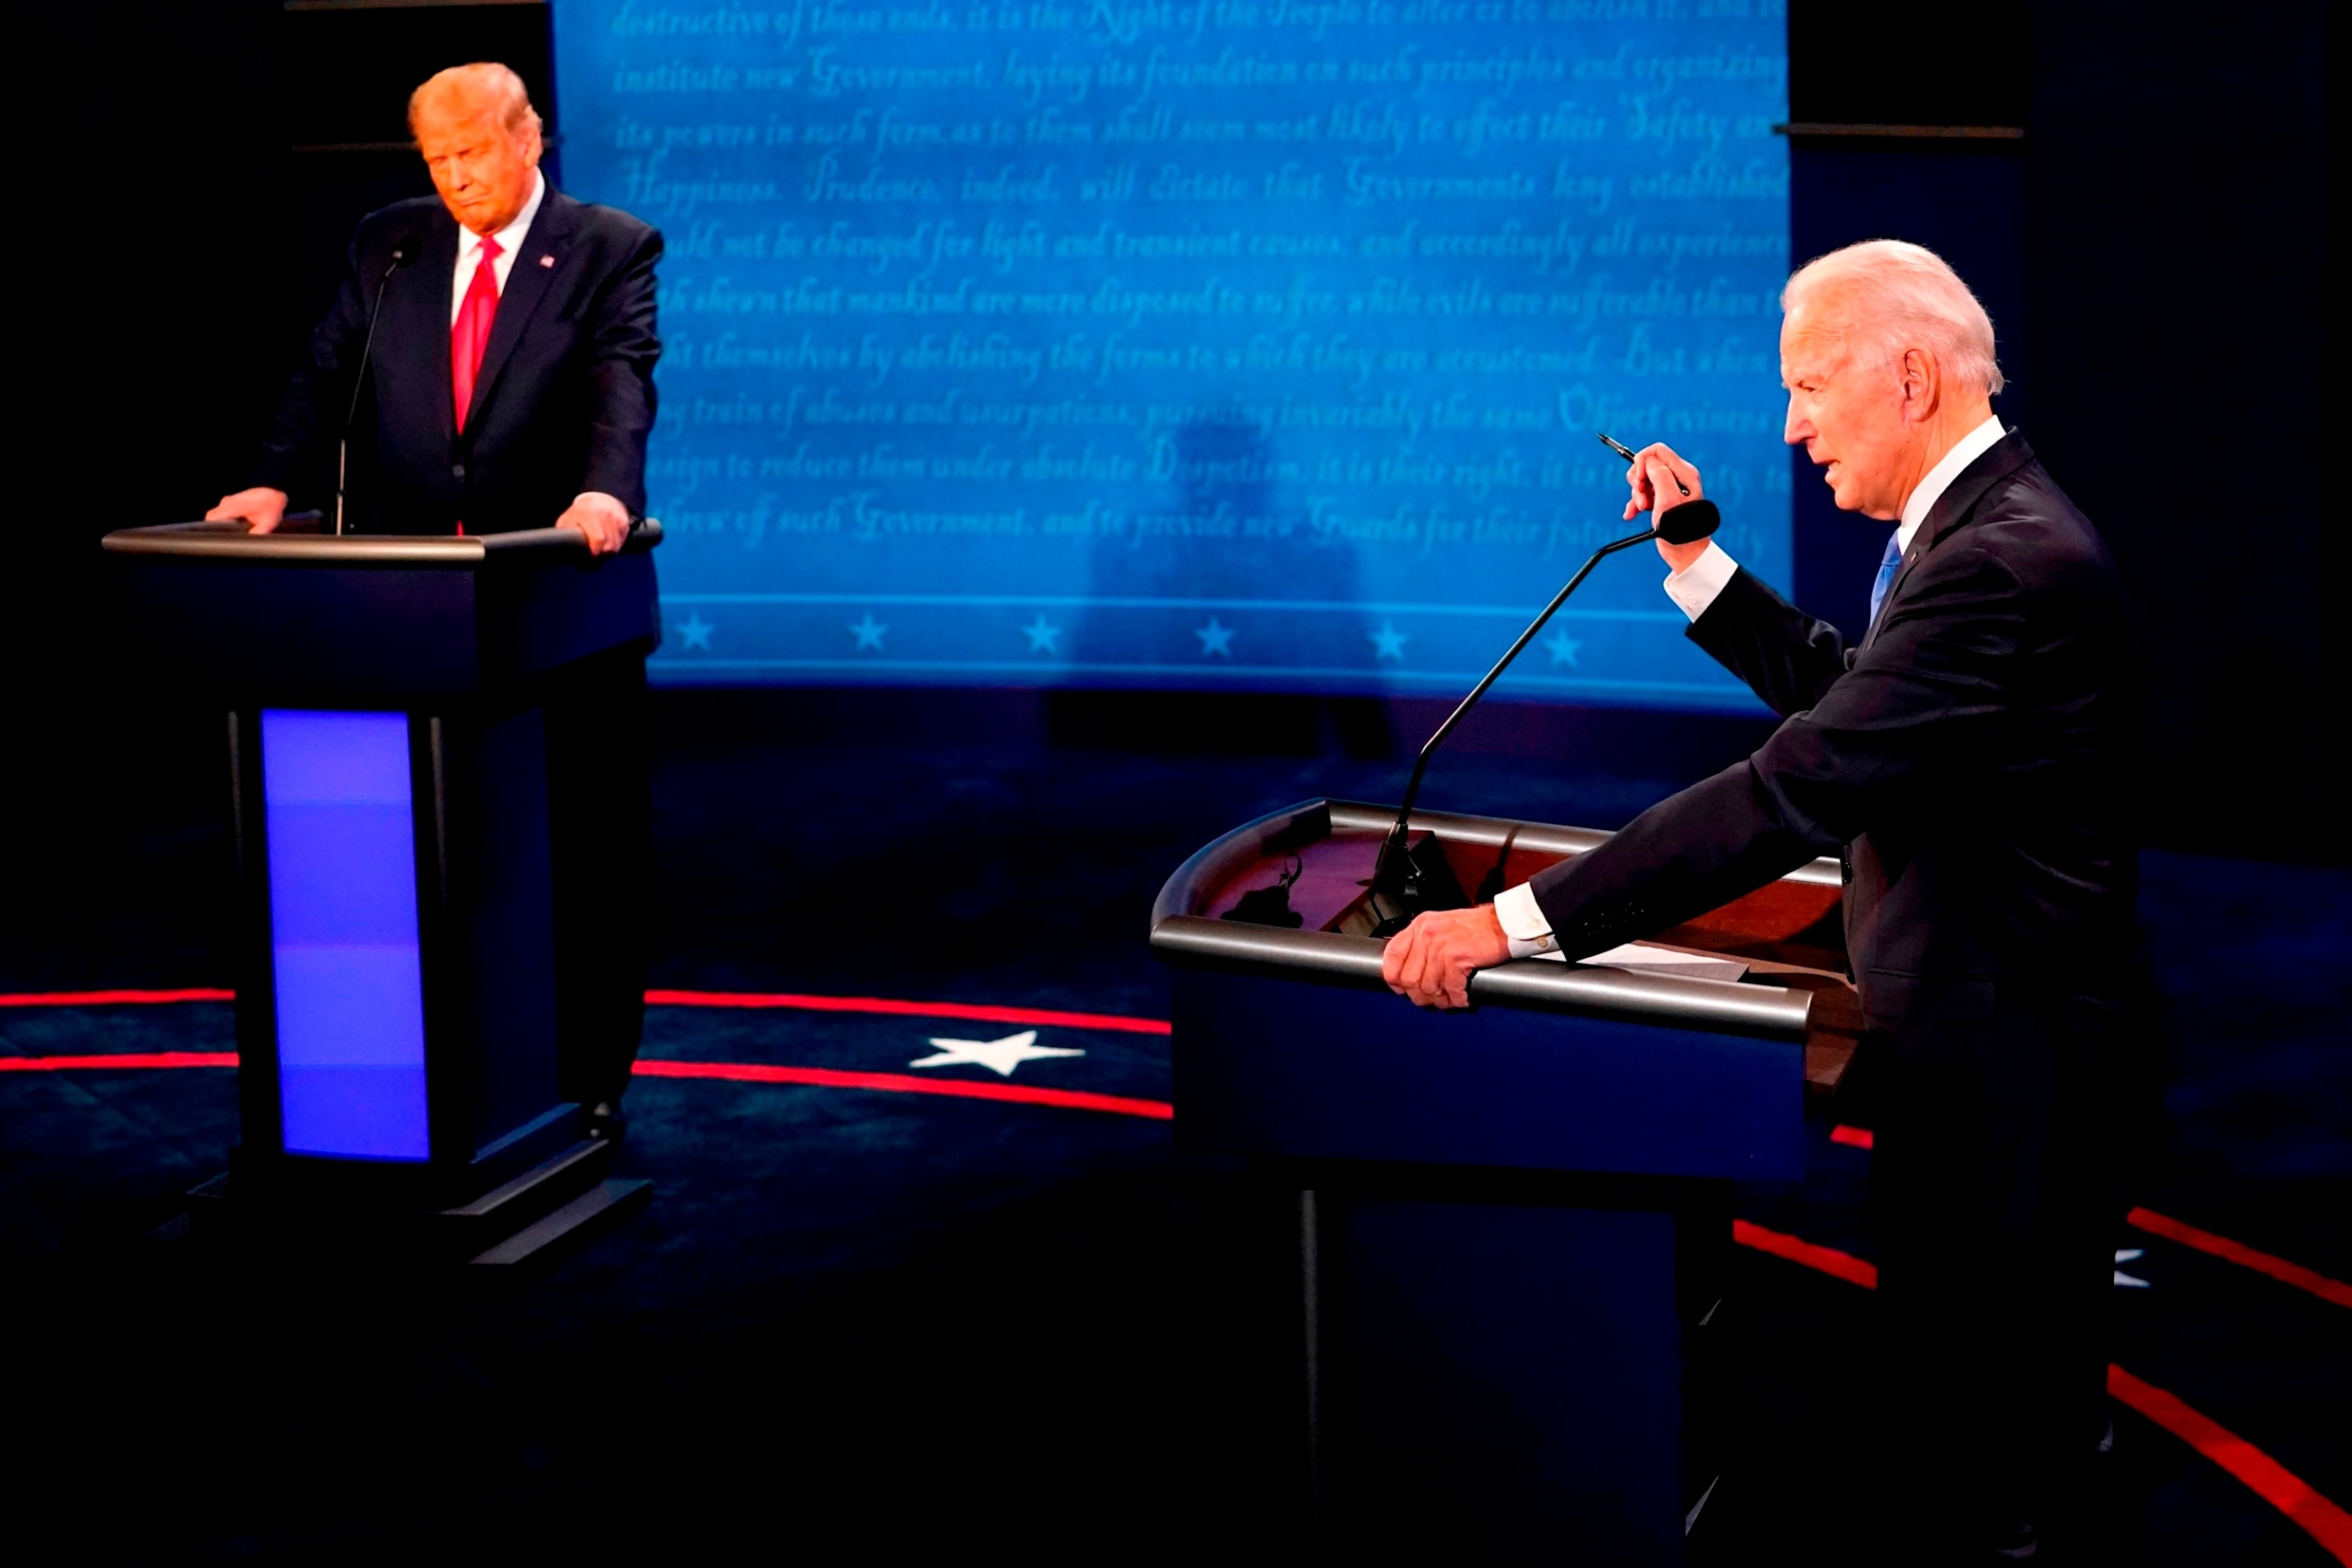 PHOTO: Joe Biden speaks, as President Donald Trump, left, listens during the U.S. presidential debate at Belmont University in Nashville, Tennessee, Oct. 22, 2020.